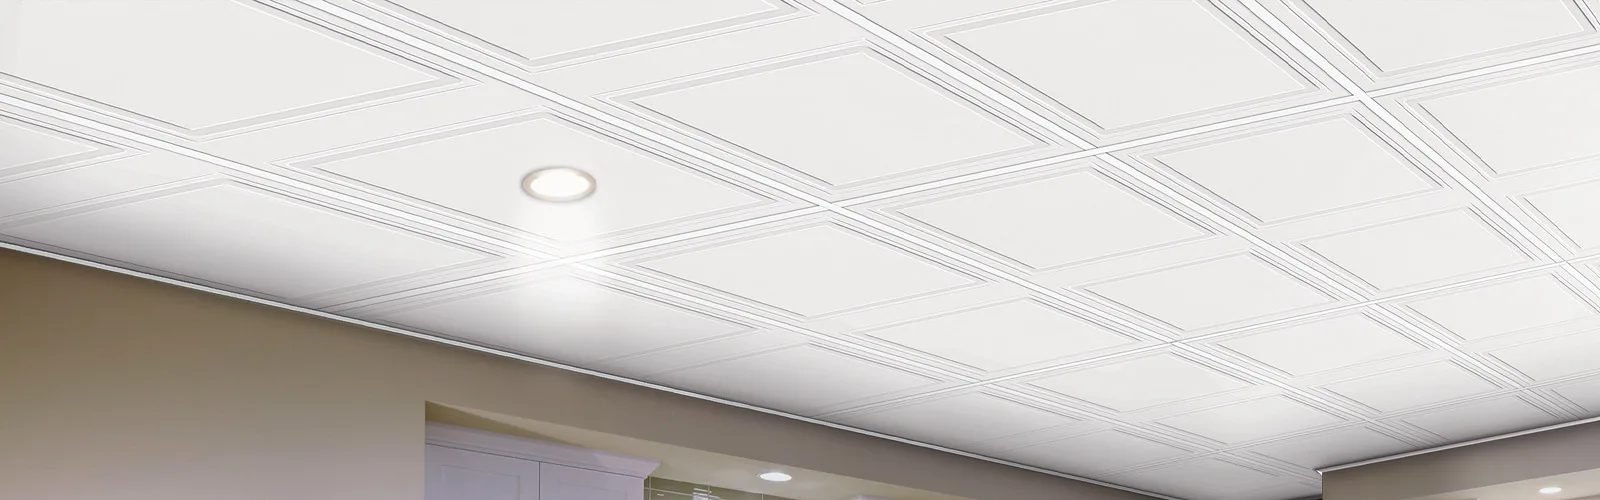 home hardware ceiling tiles